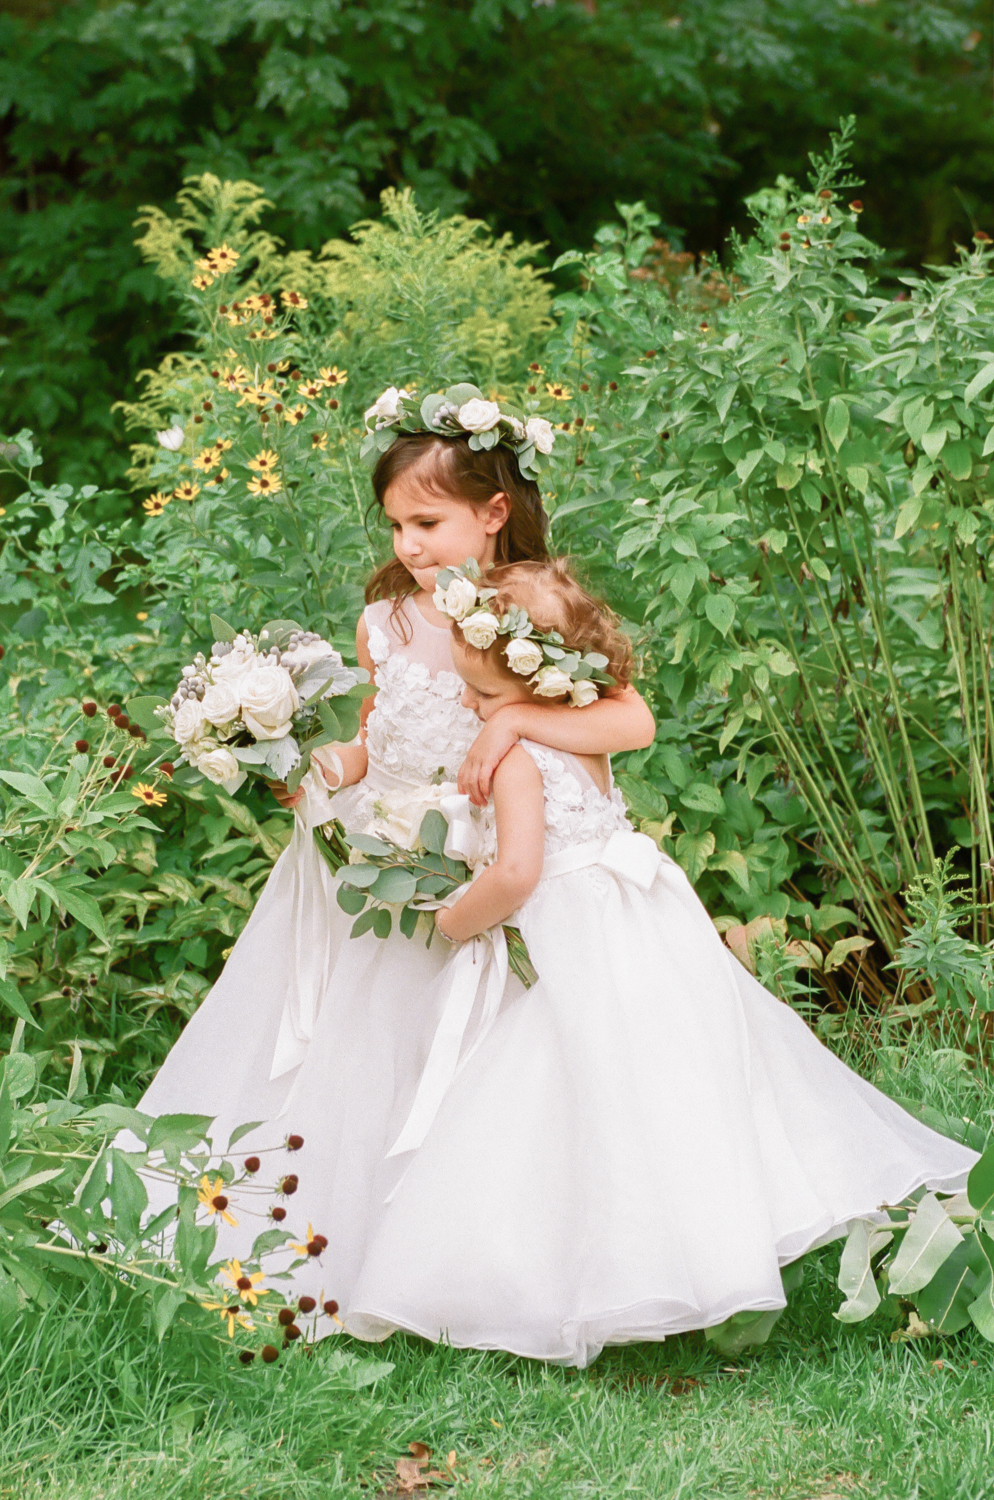 Flowers girls with flower crowns hugging each other, St. Louis fine art wedding photographer Erica Robnett Photography